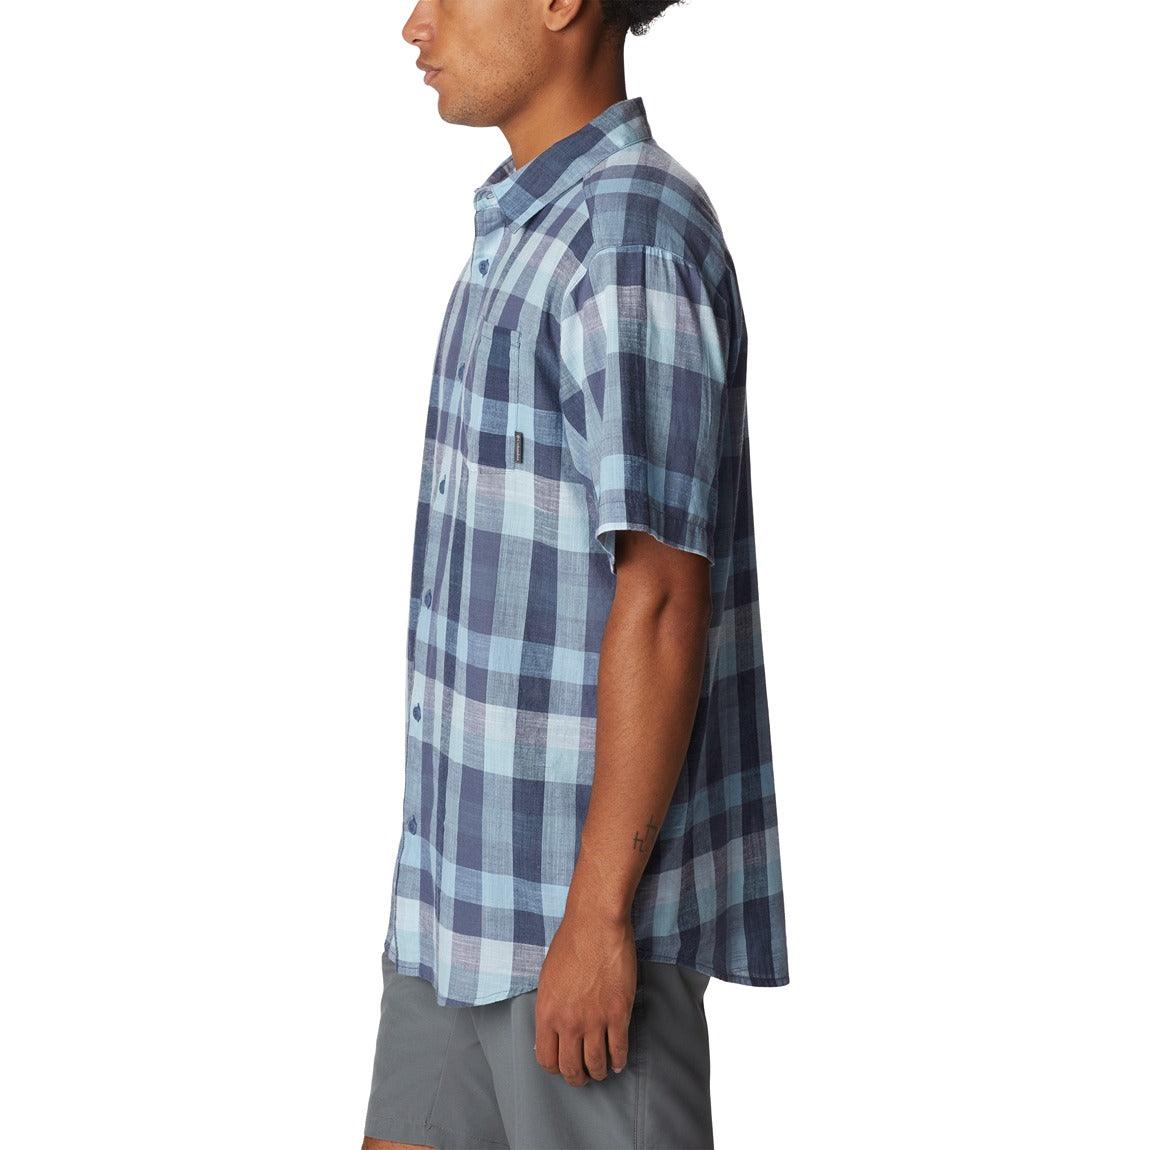 Under Exposure™ Yarn Dye Short Sleeve Shirt - Men - Sports Excellence